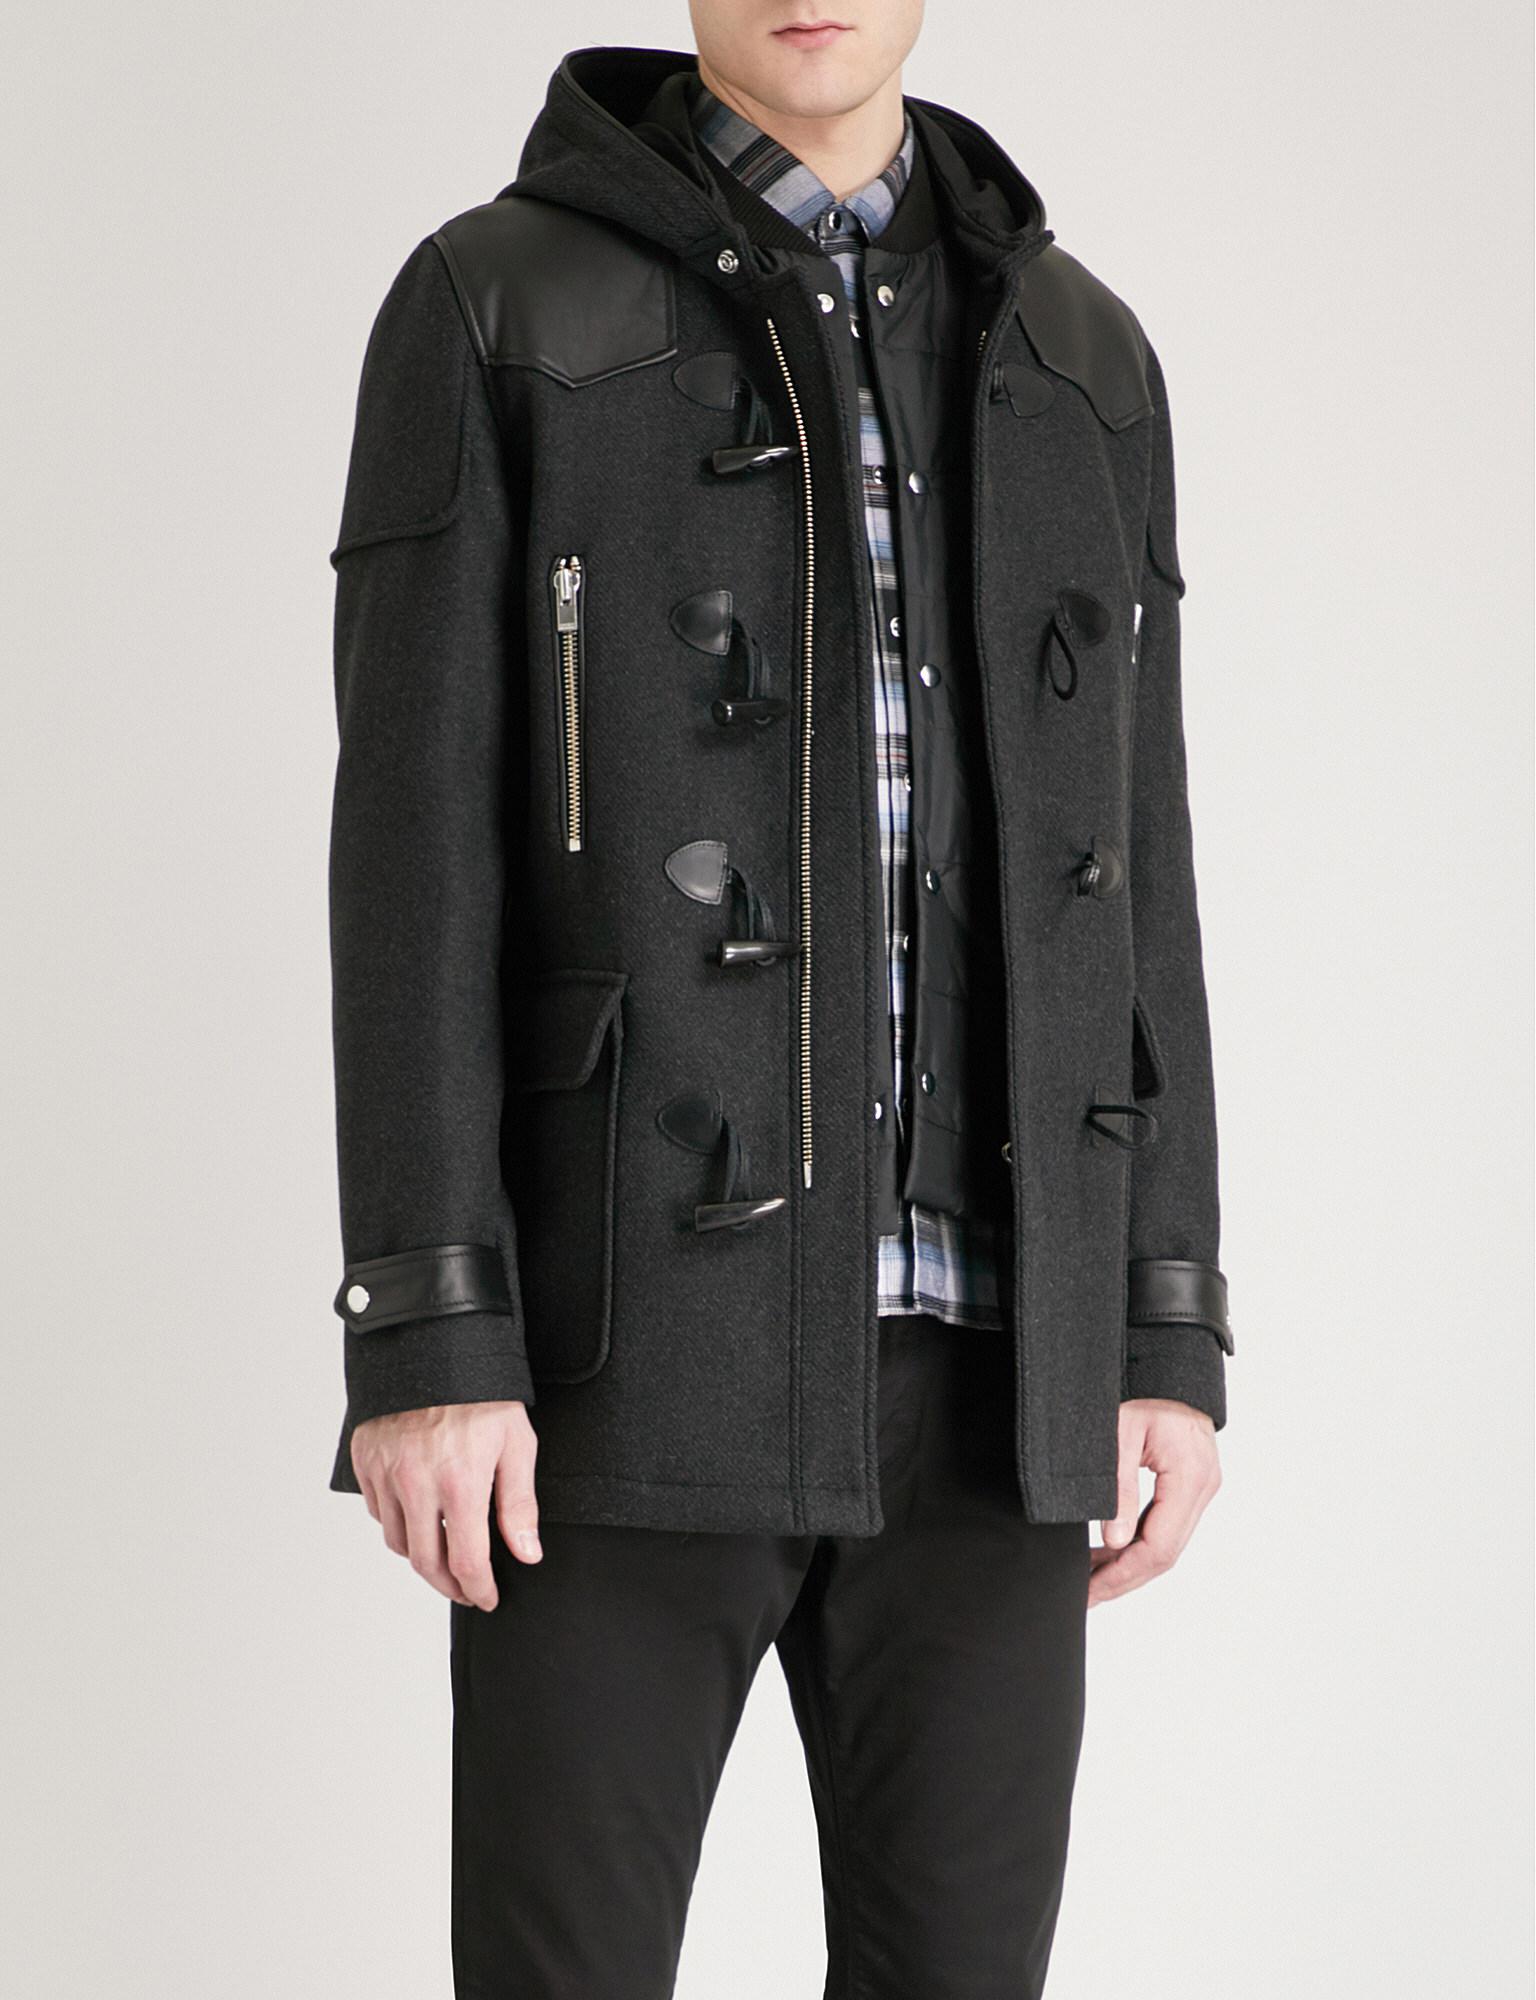 Lyst - The Kooples Leather-trimmed Wool-blend Duffel Coat in Black for Men